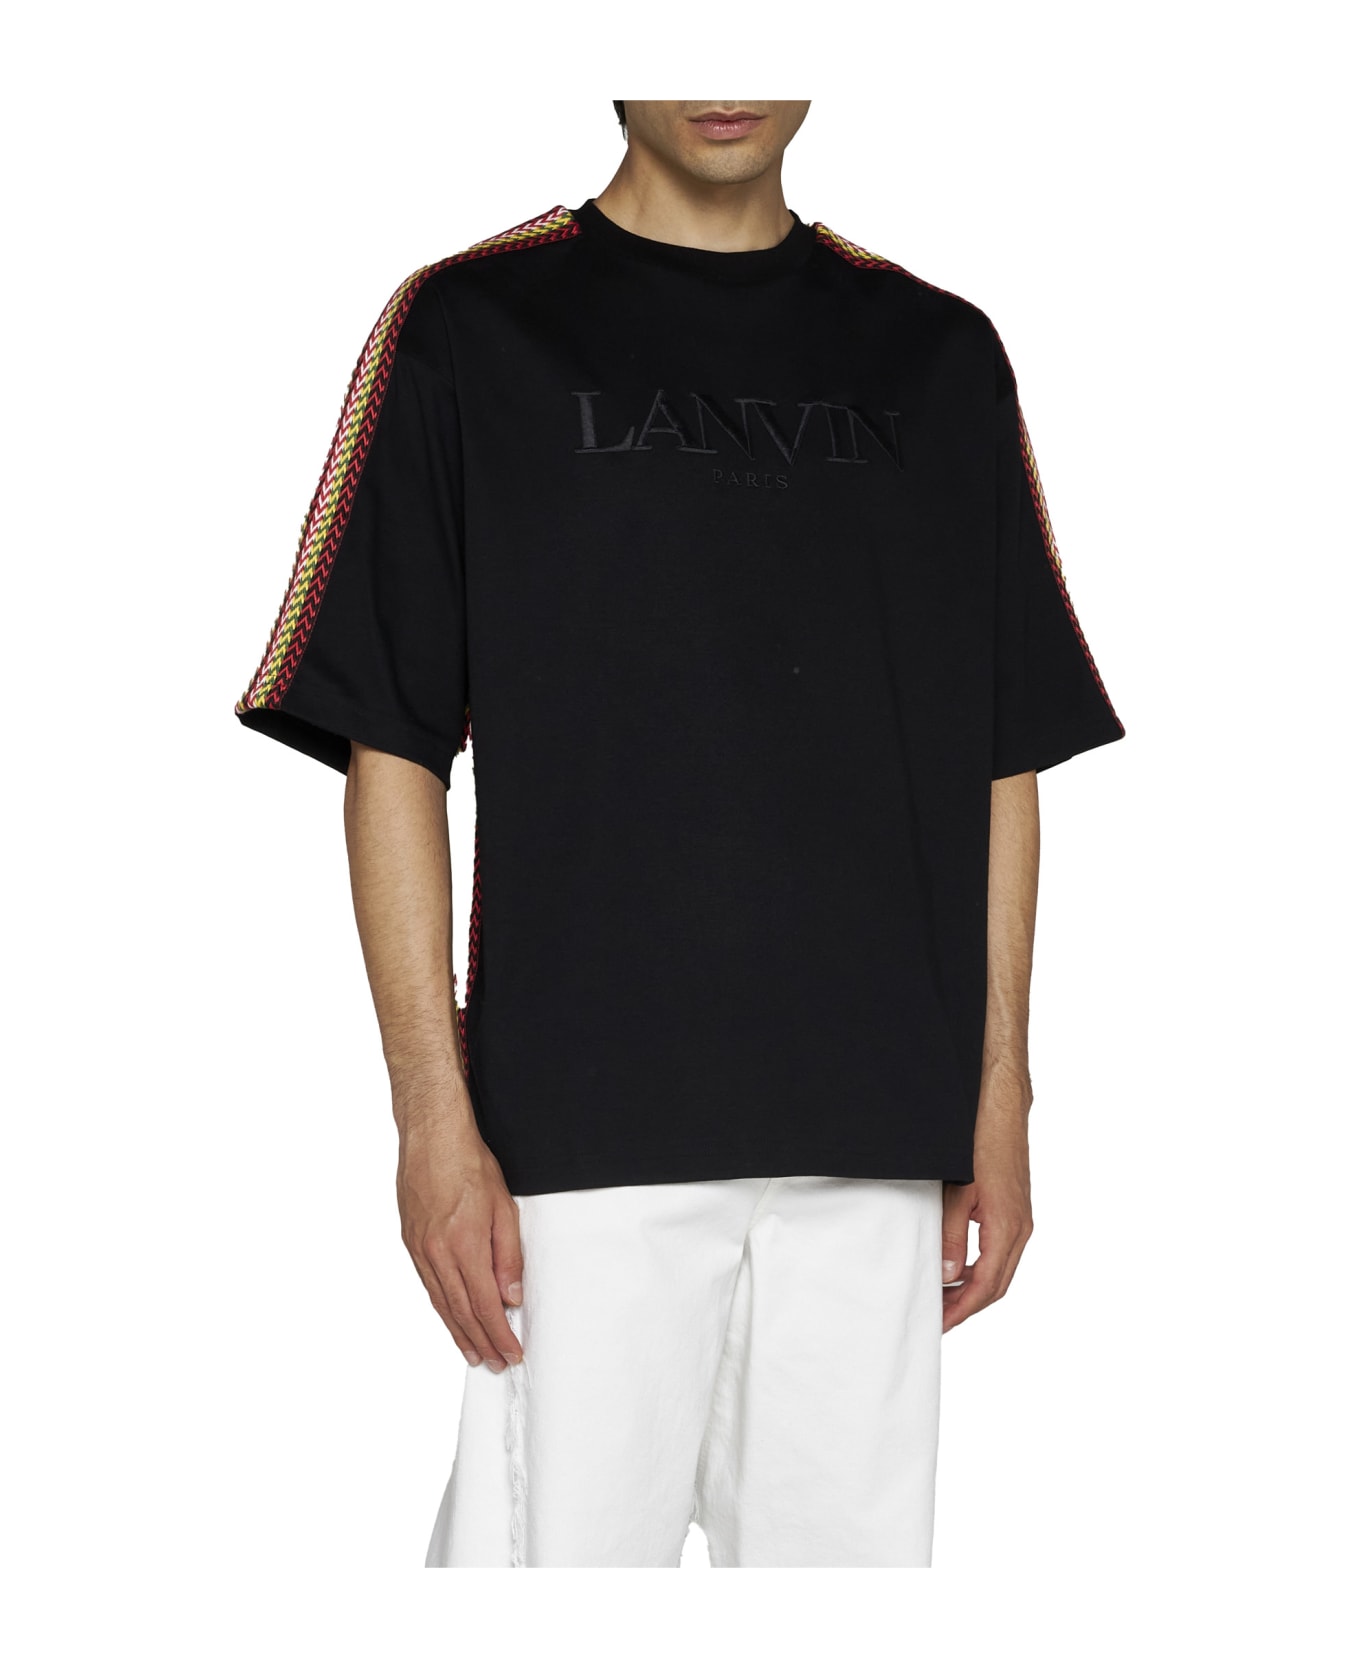 Lanvin T-Shirt - Black シャツ